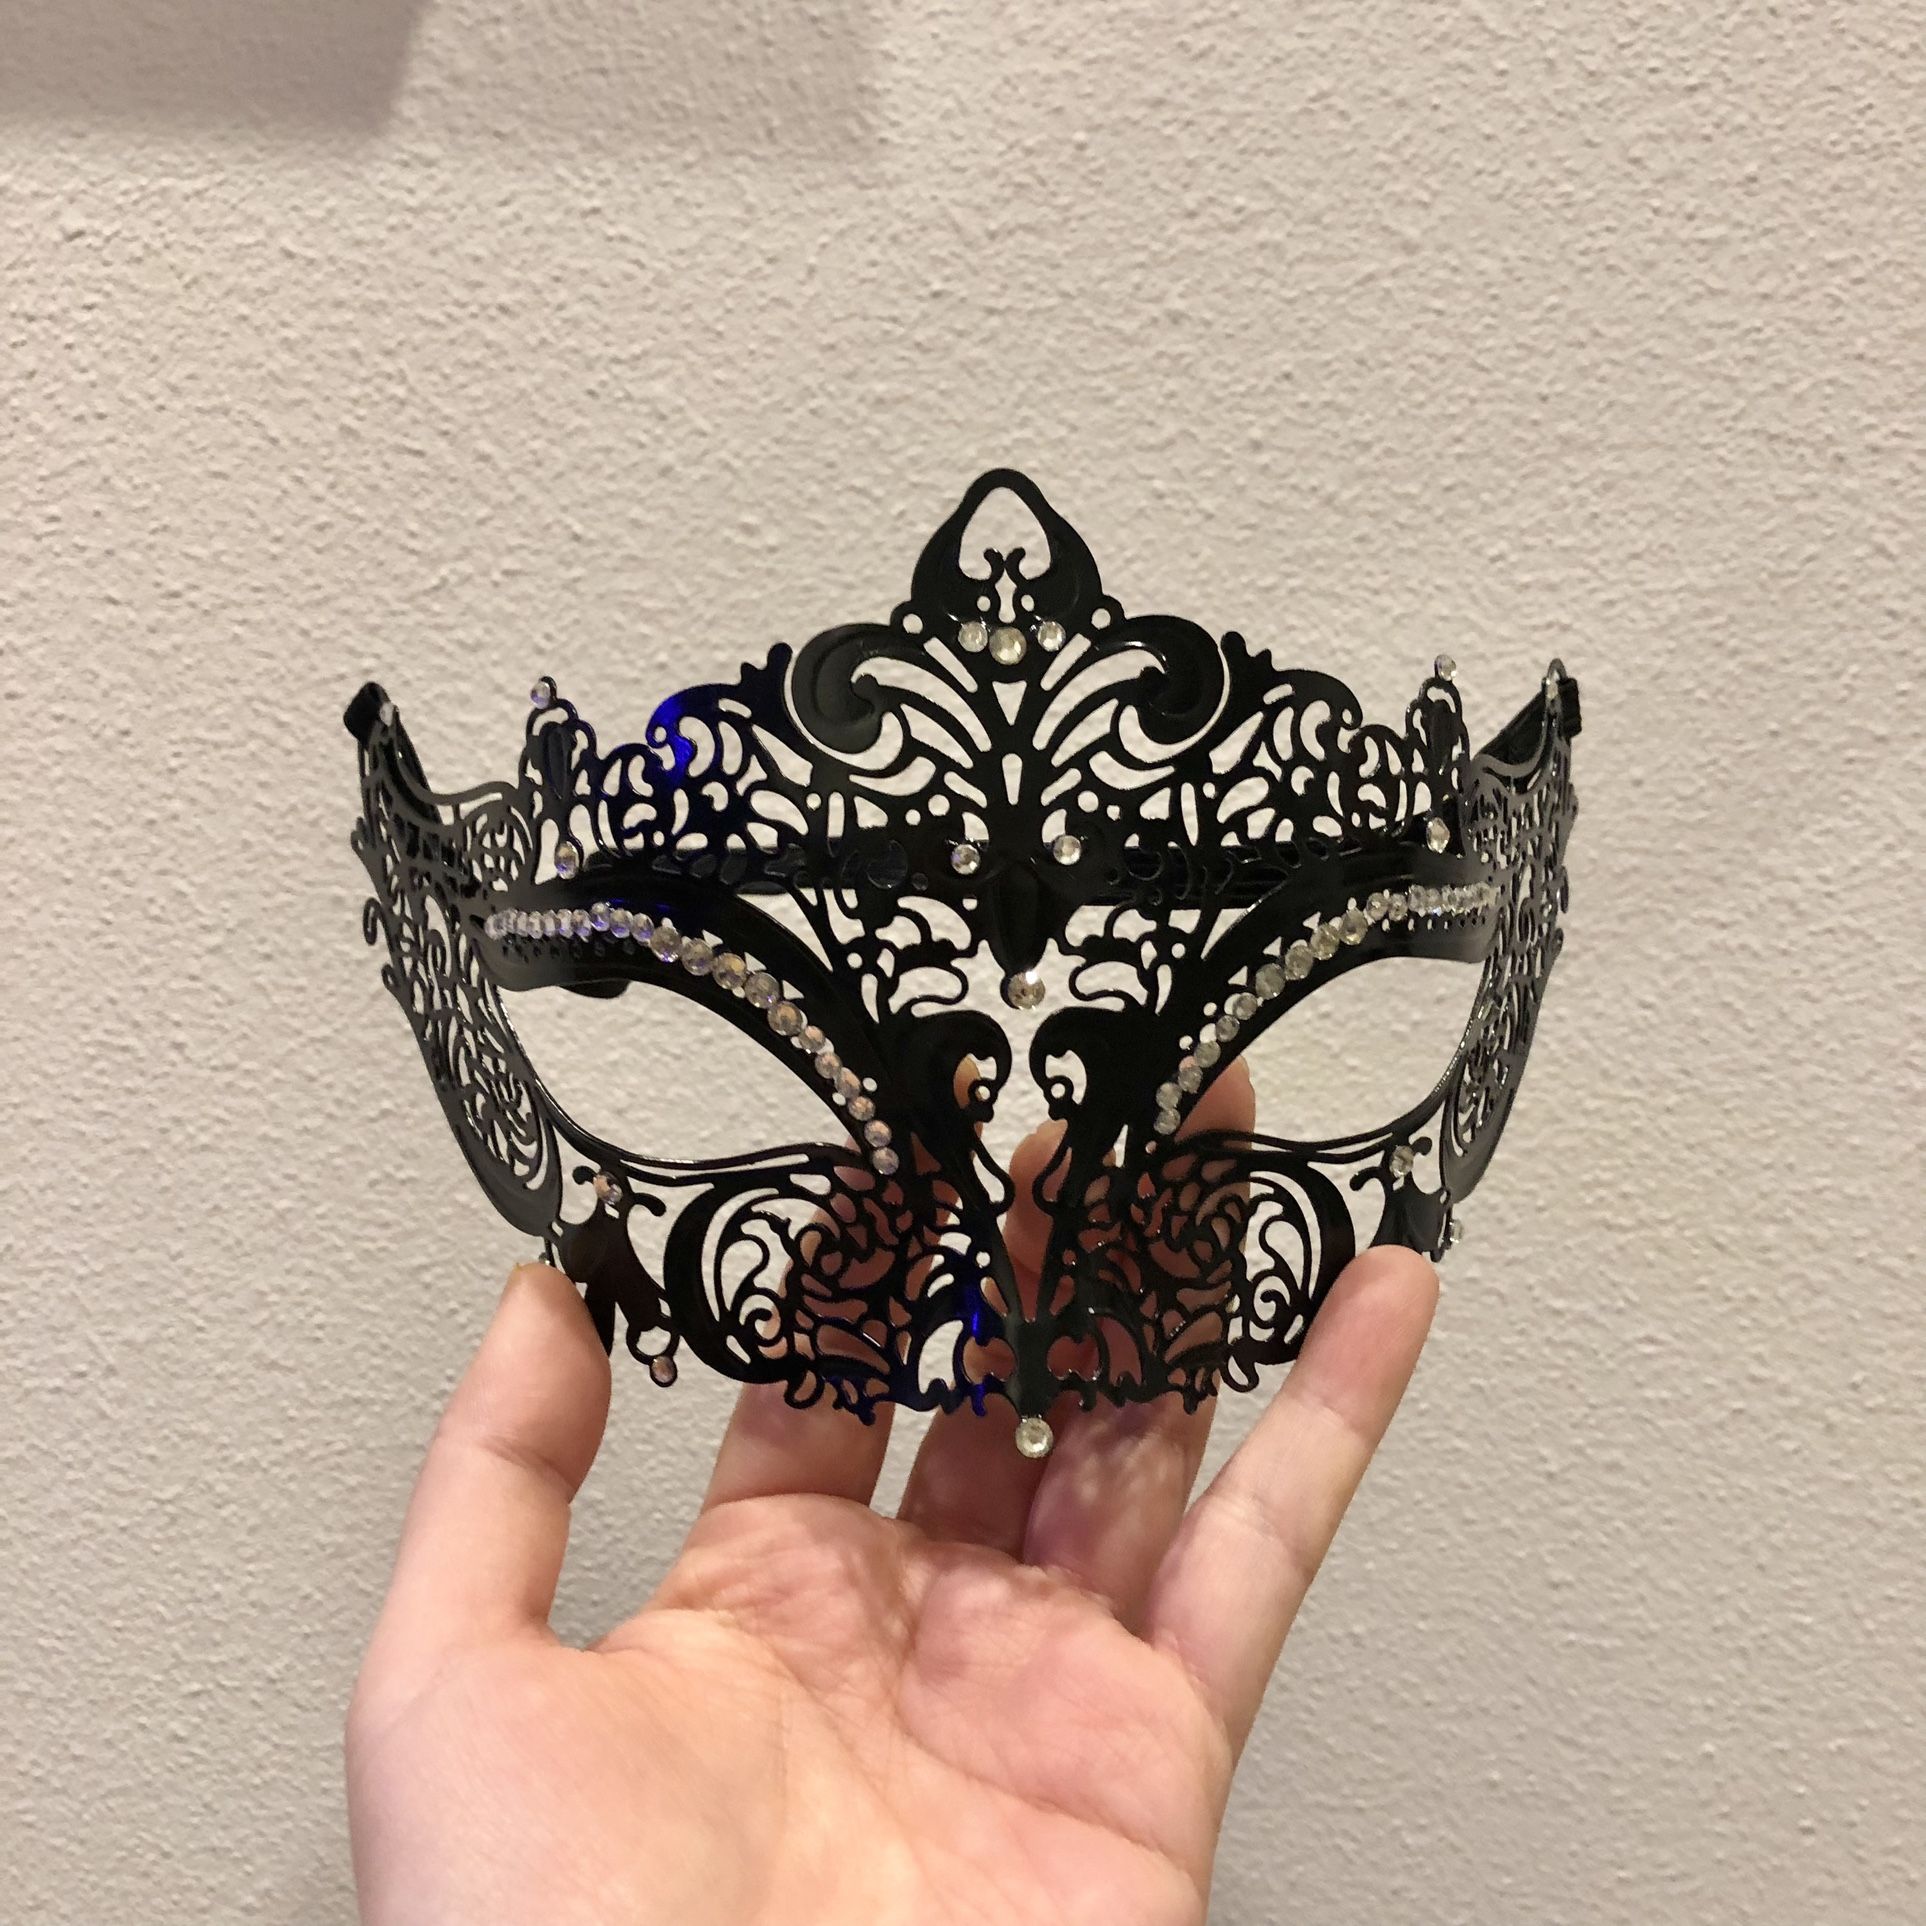 Black Lace Masquerade Mask Light weight Metal Halloween Mask